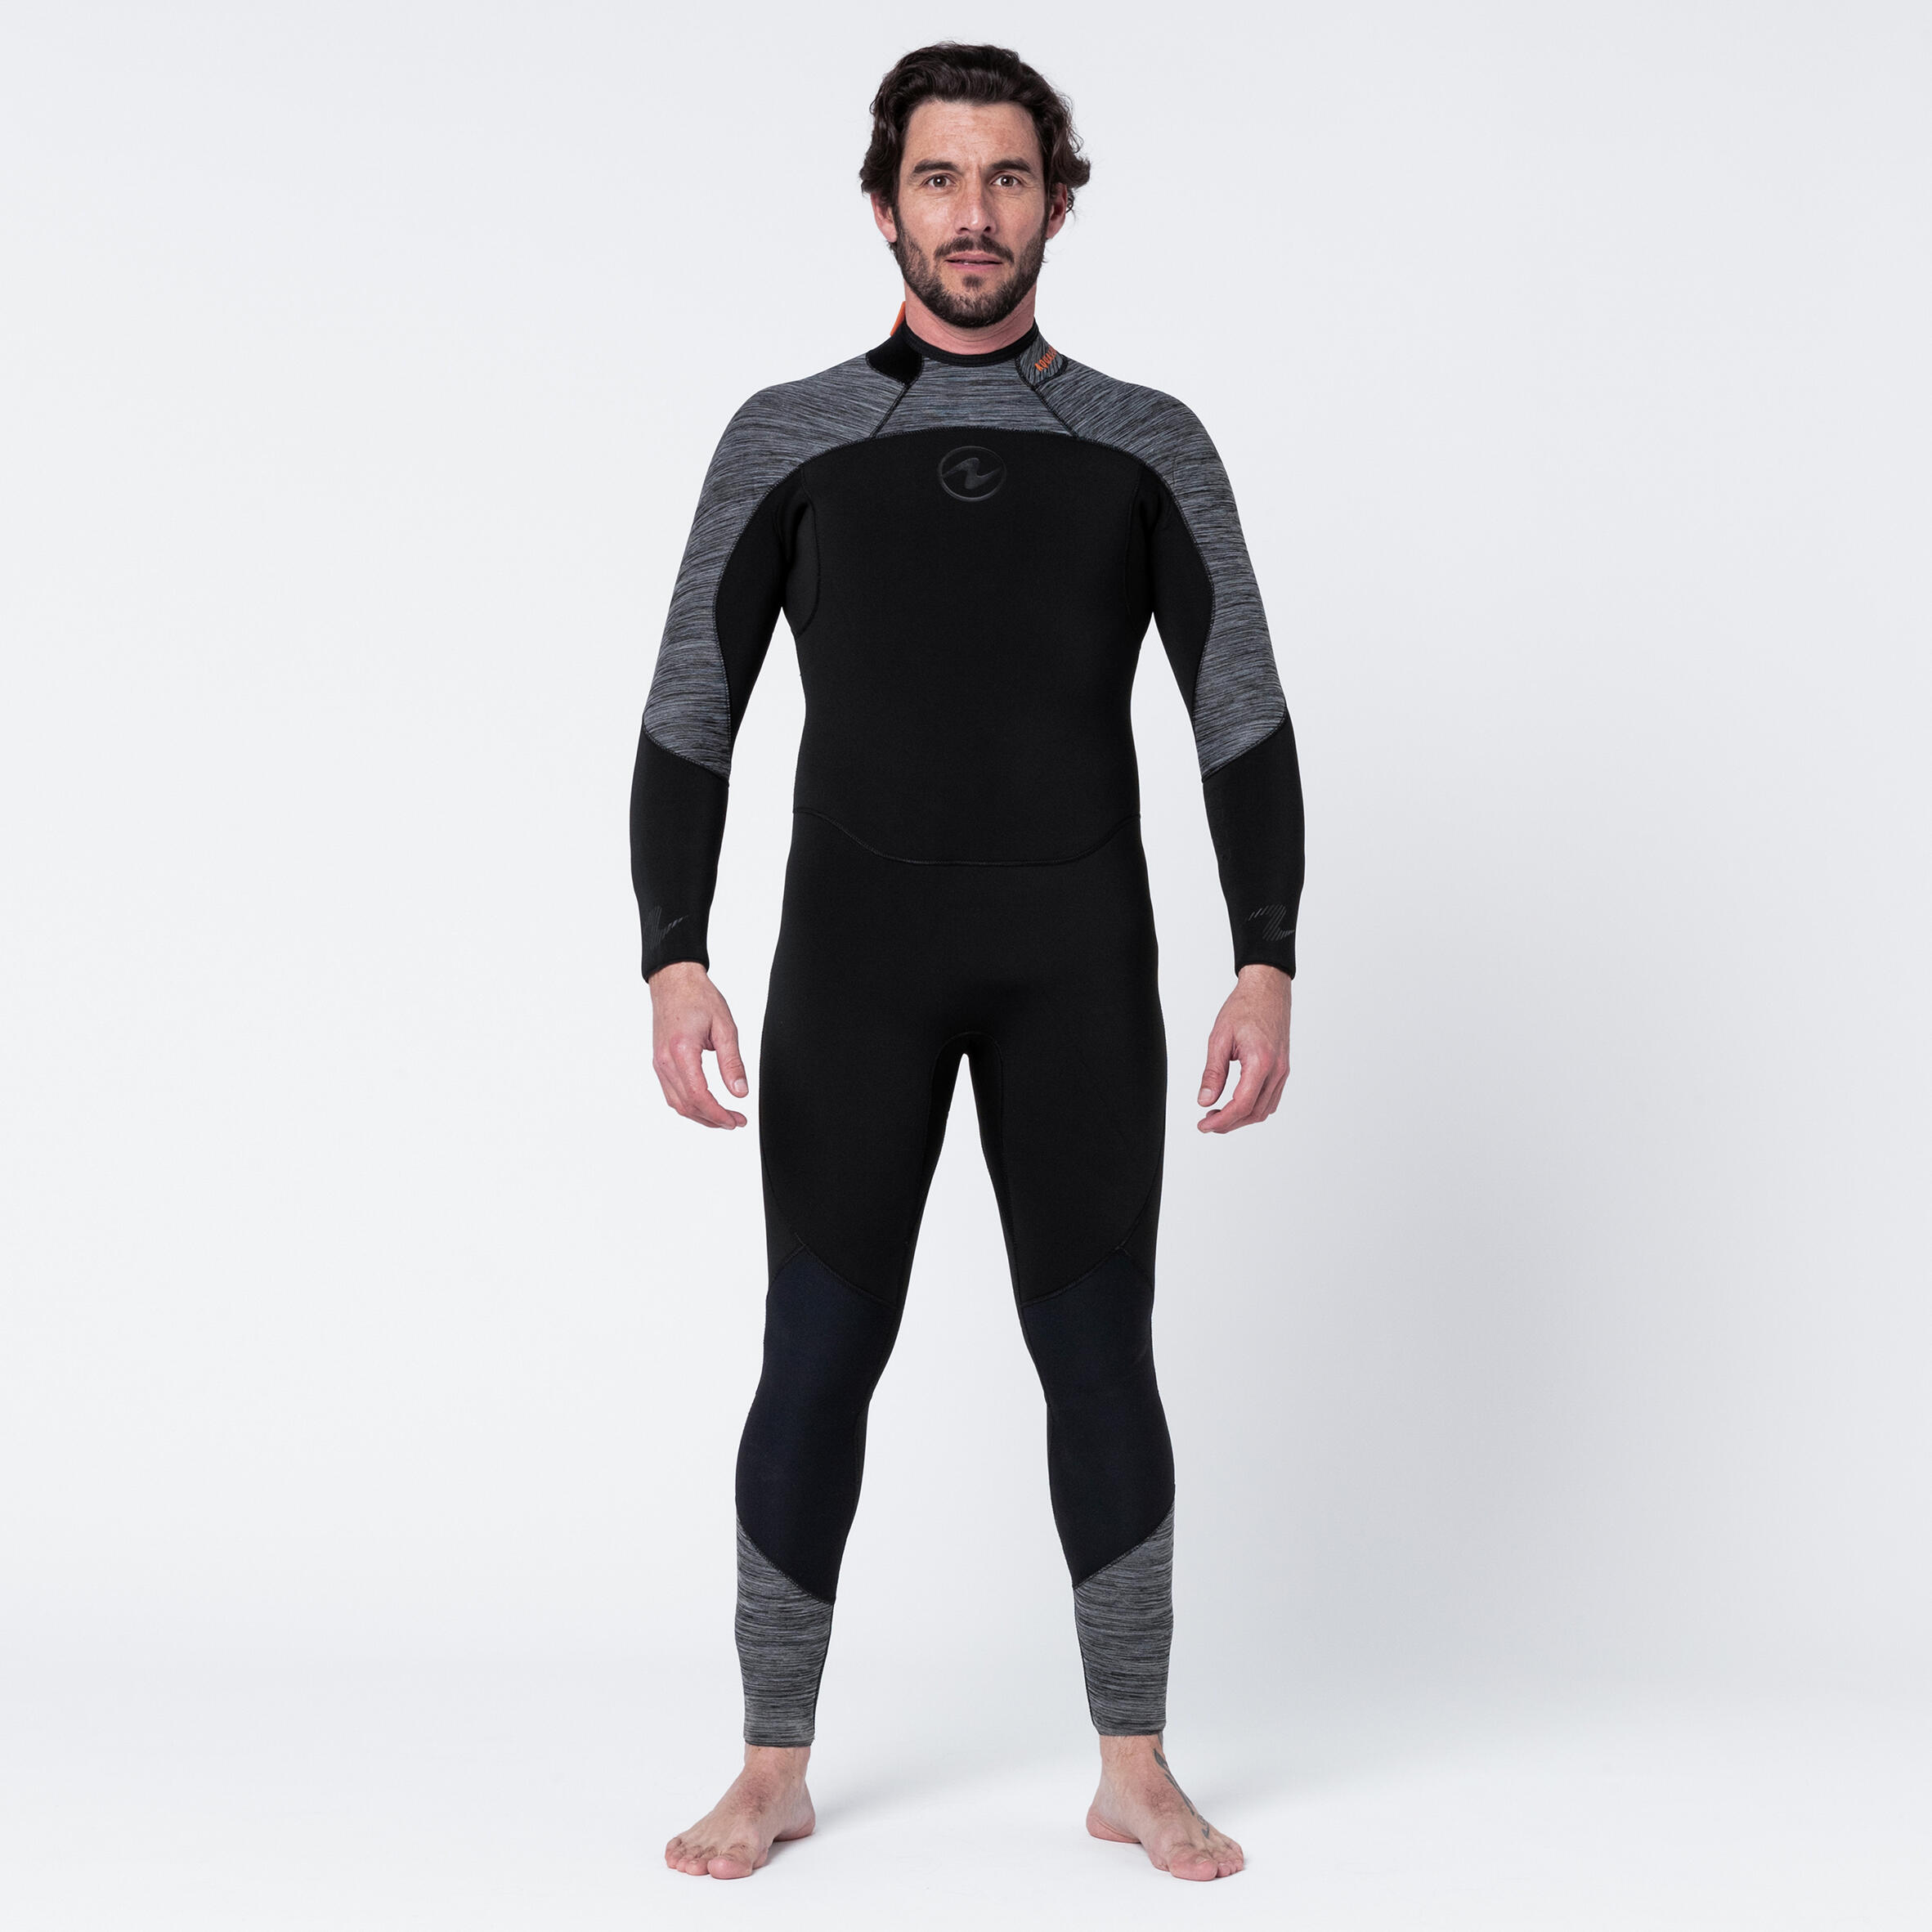 Decathlon | Muta subacquea uomo AQUALUNG AQUAFLEX 5 mm nero-grigio |  Aqualung